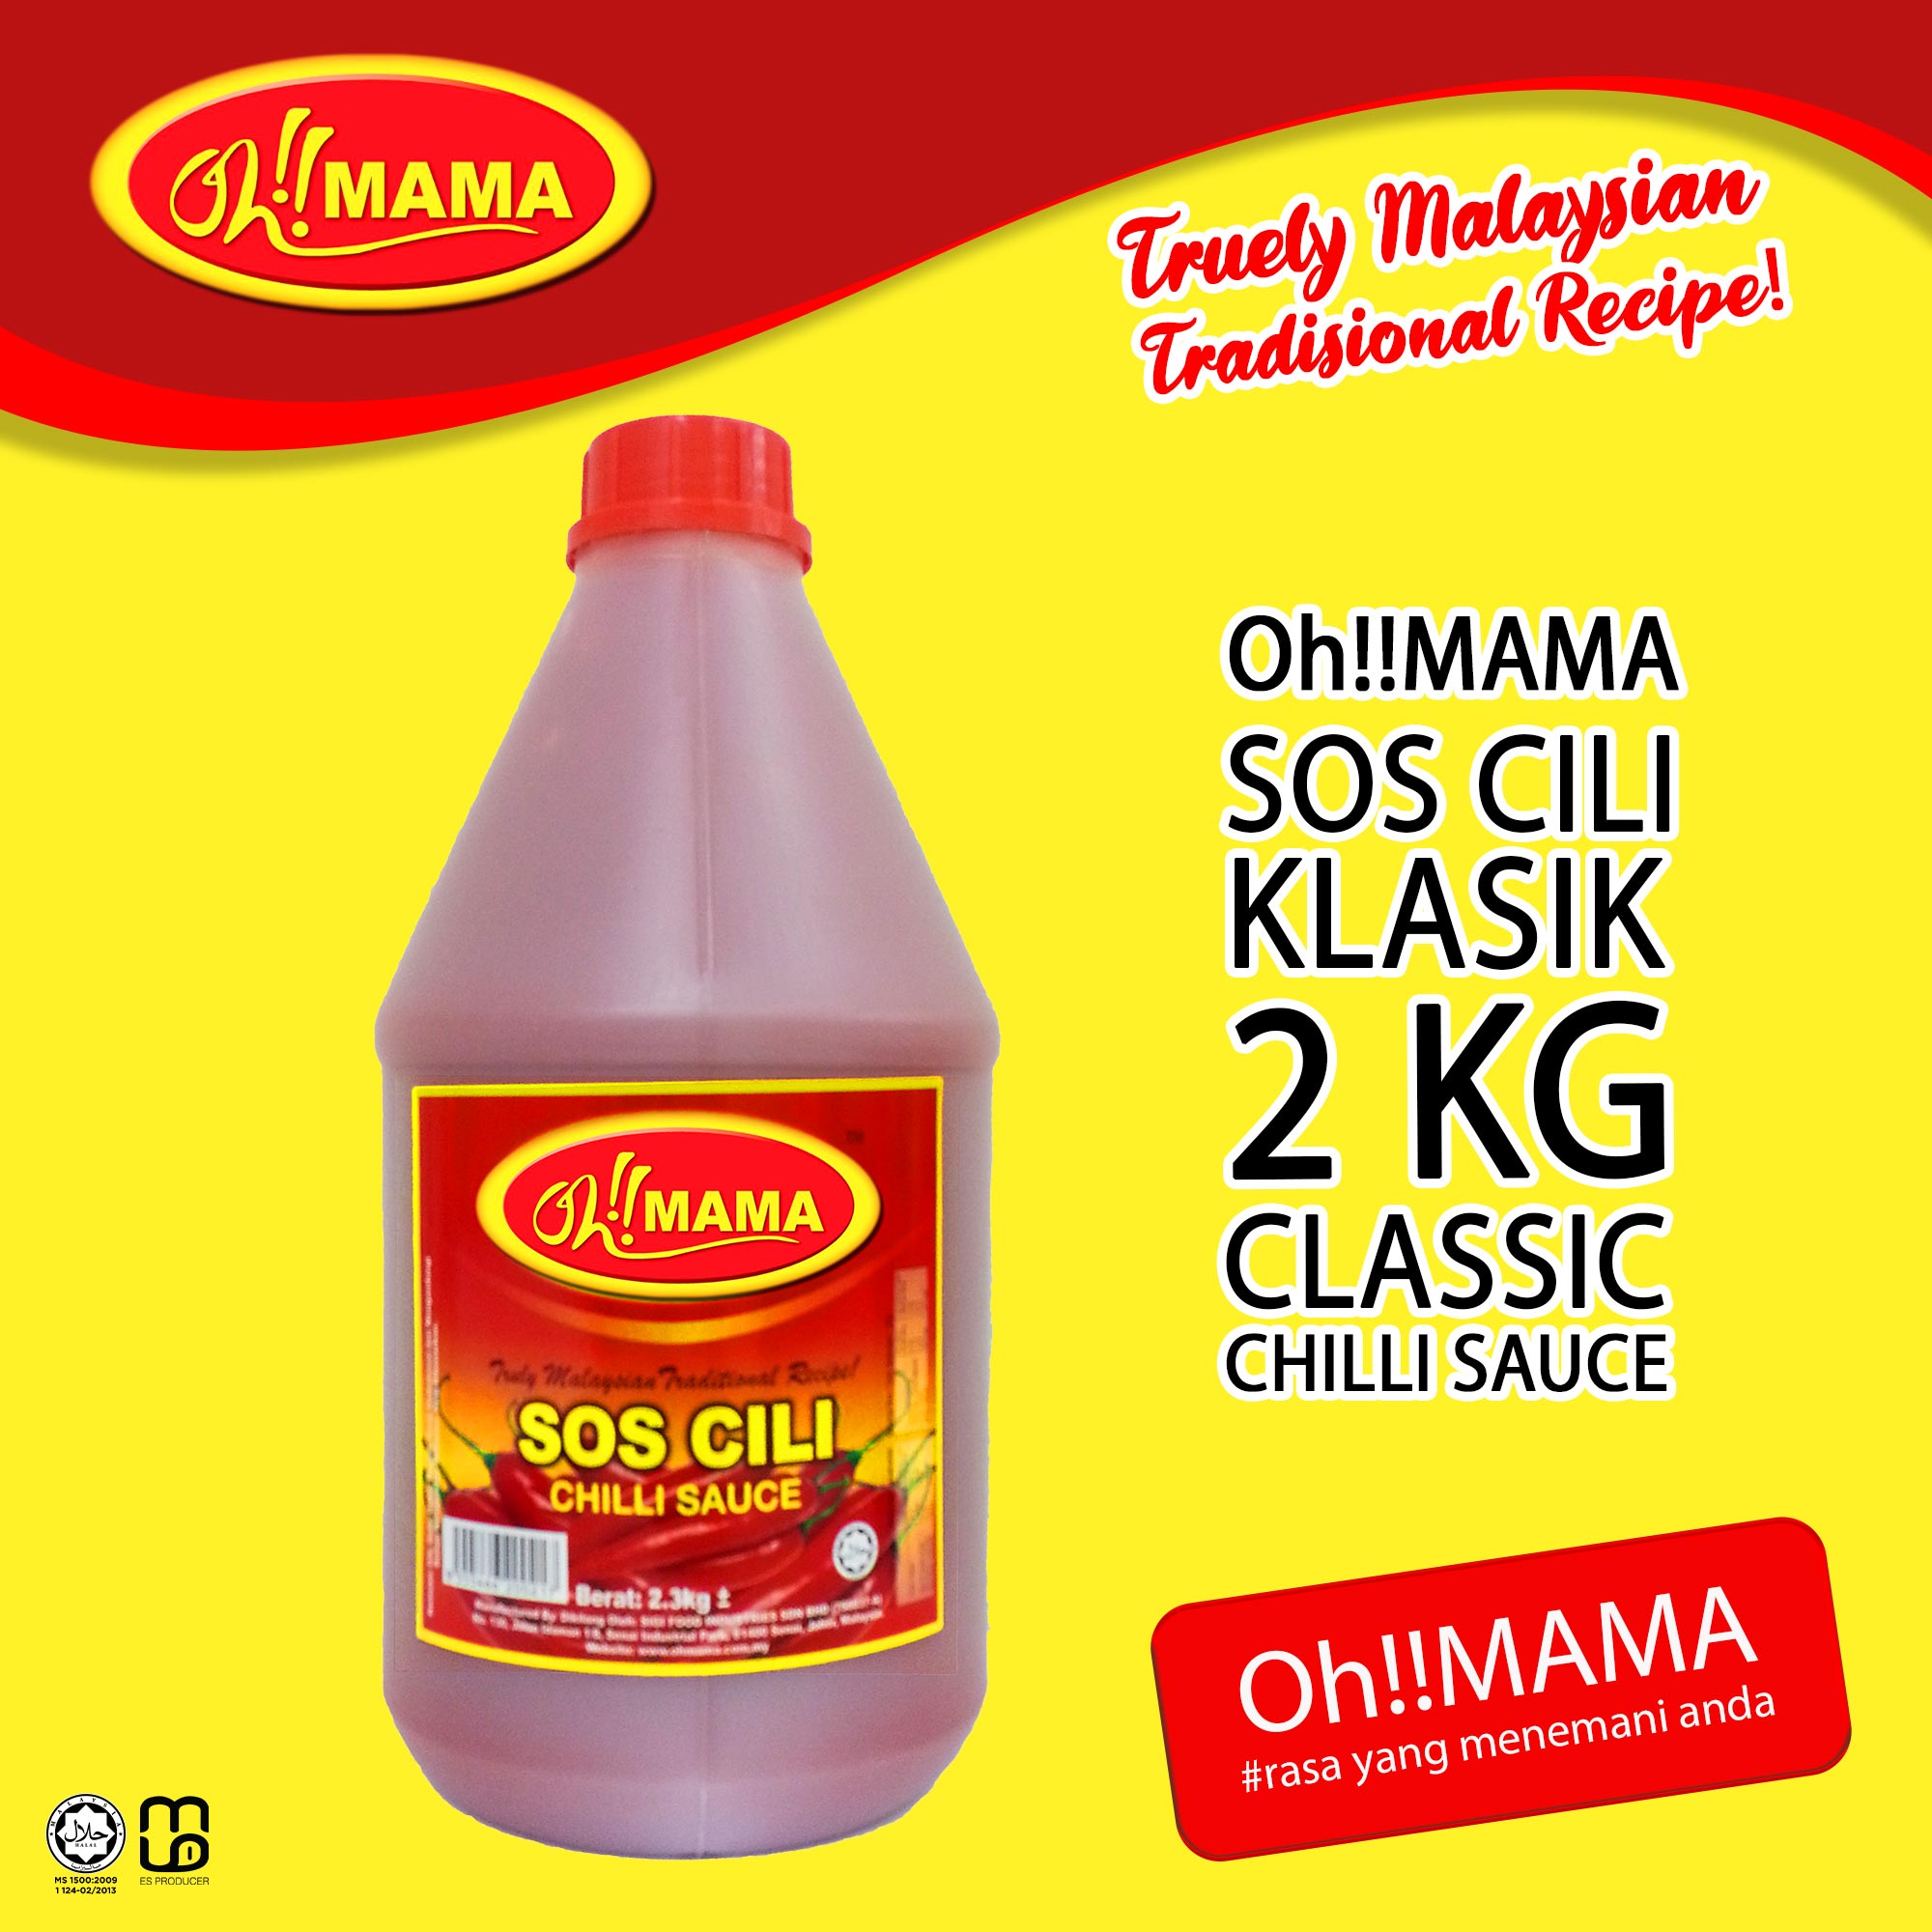 Oh!!MAMA Classic Chilli Sauce 2kg